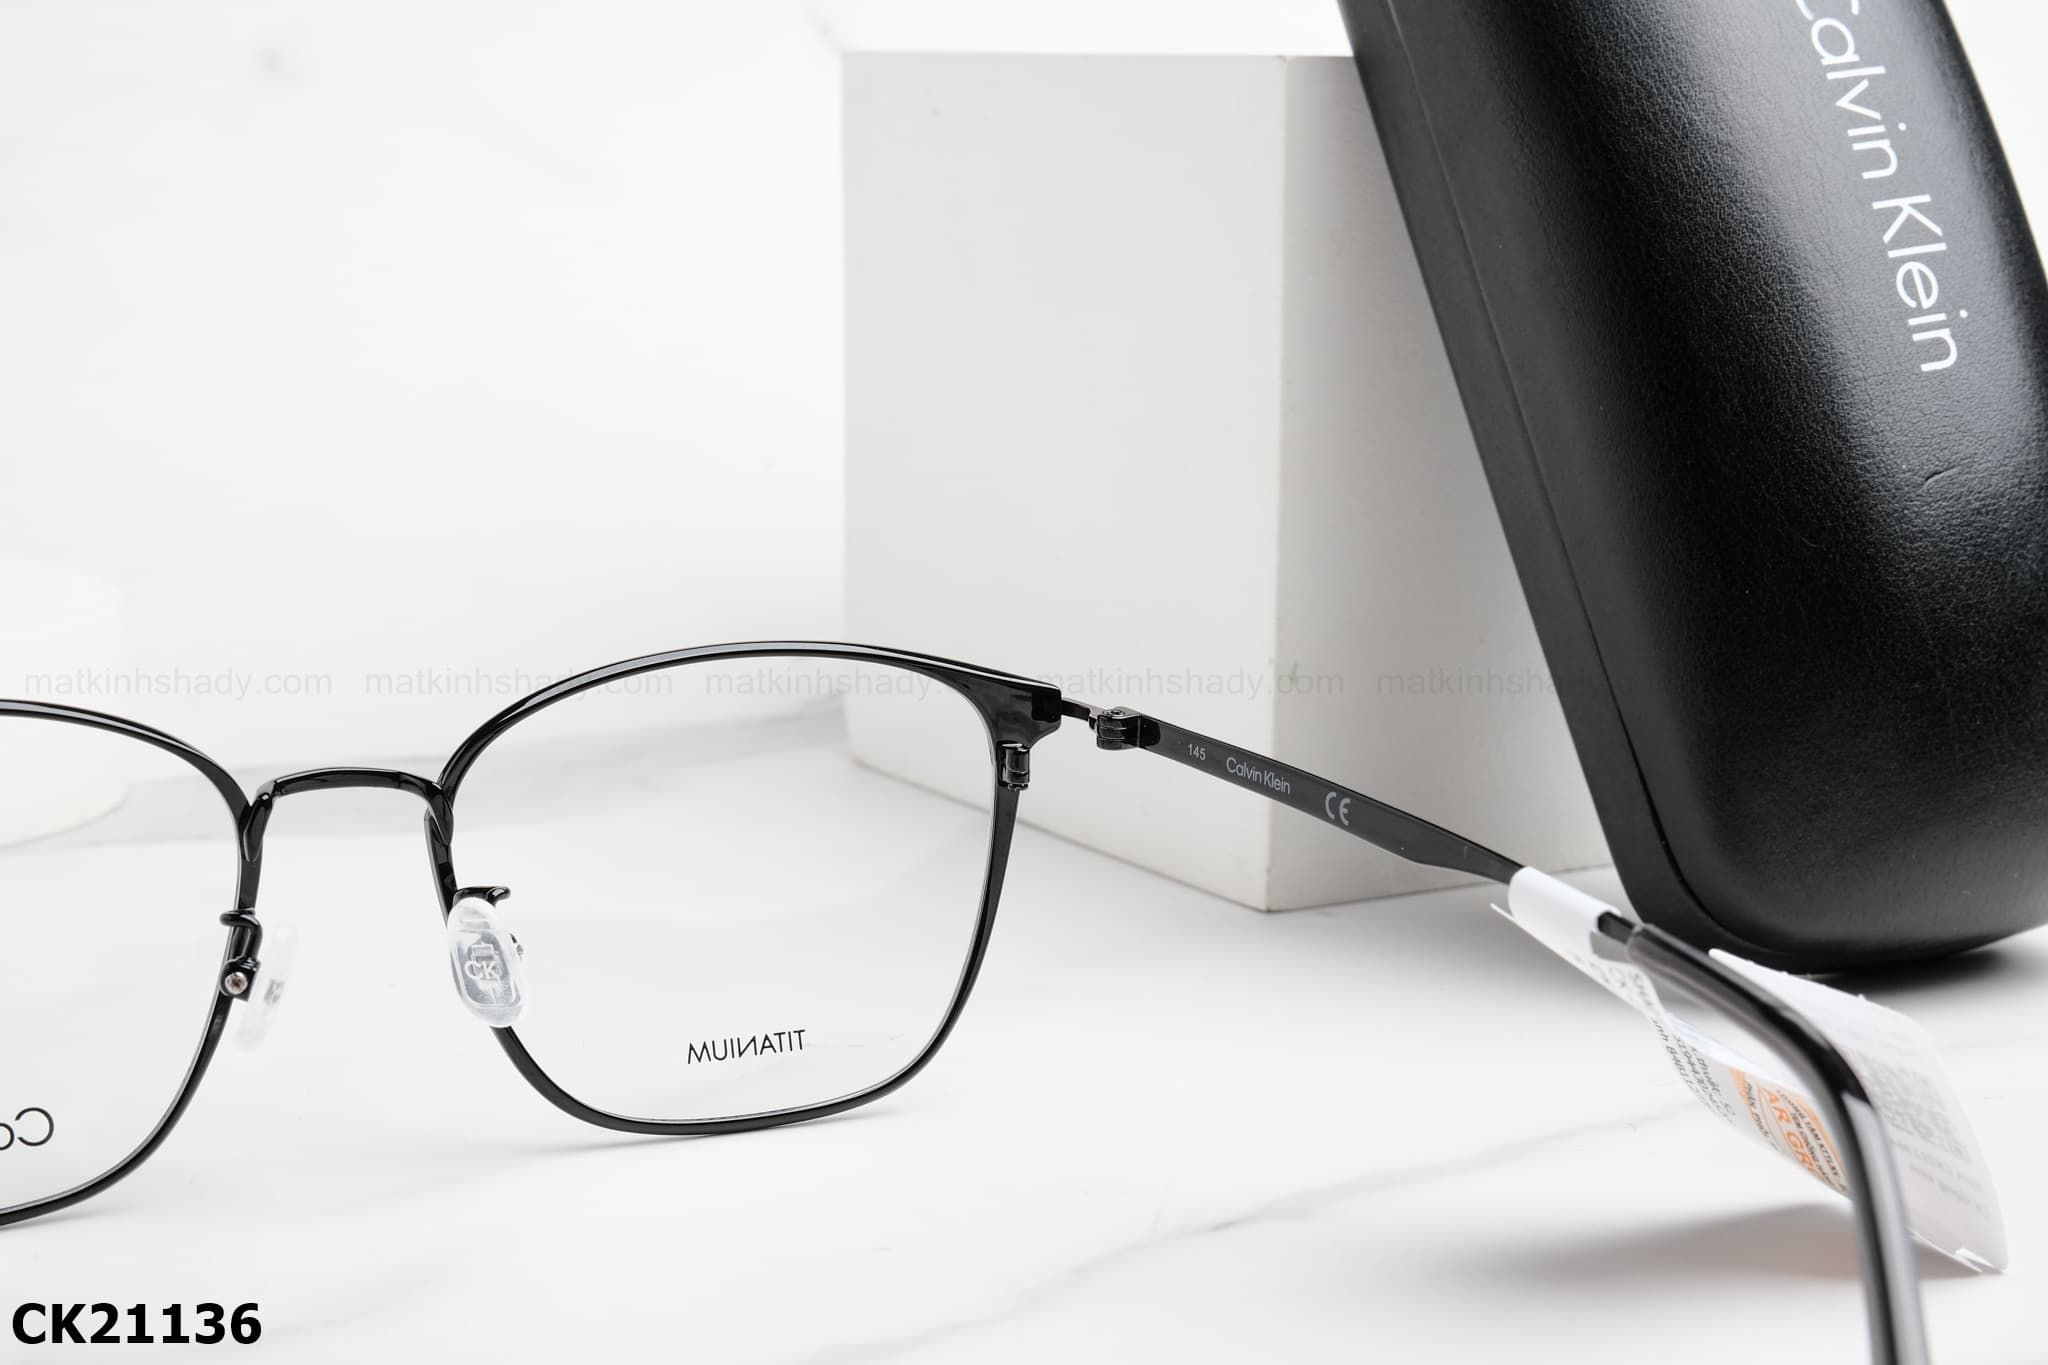  Calvin Klein Eyewear - Glasses - CK21136 